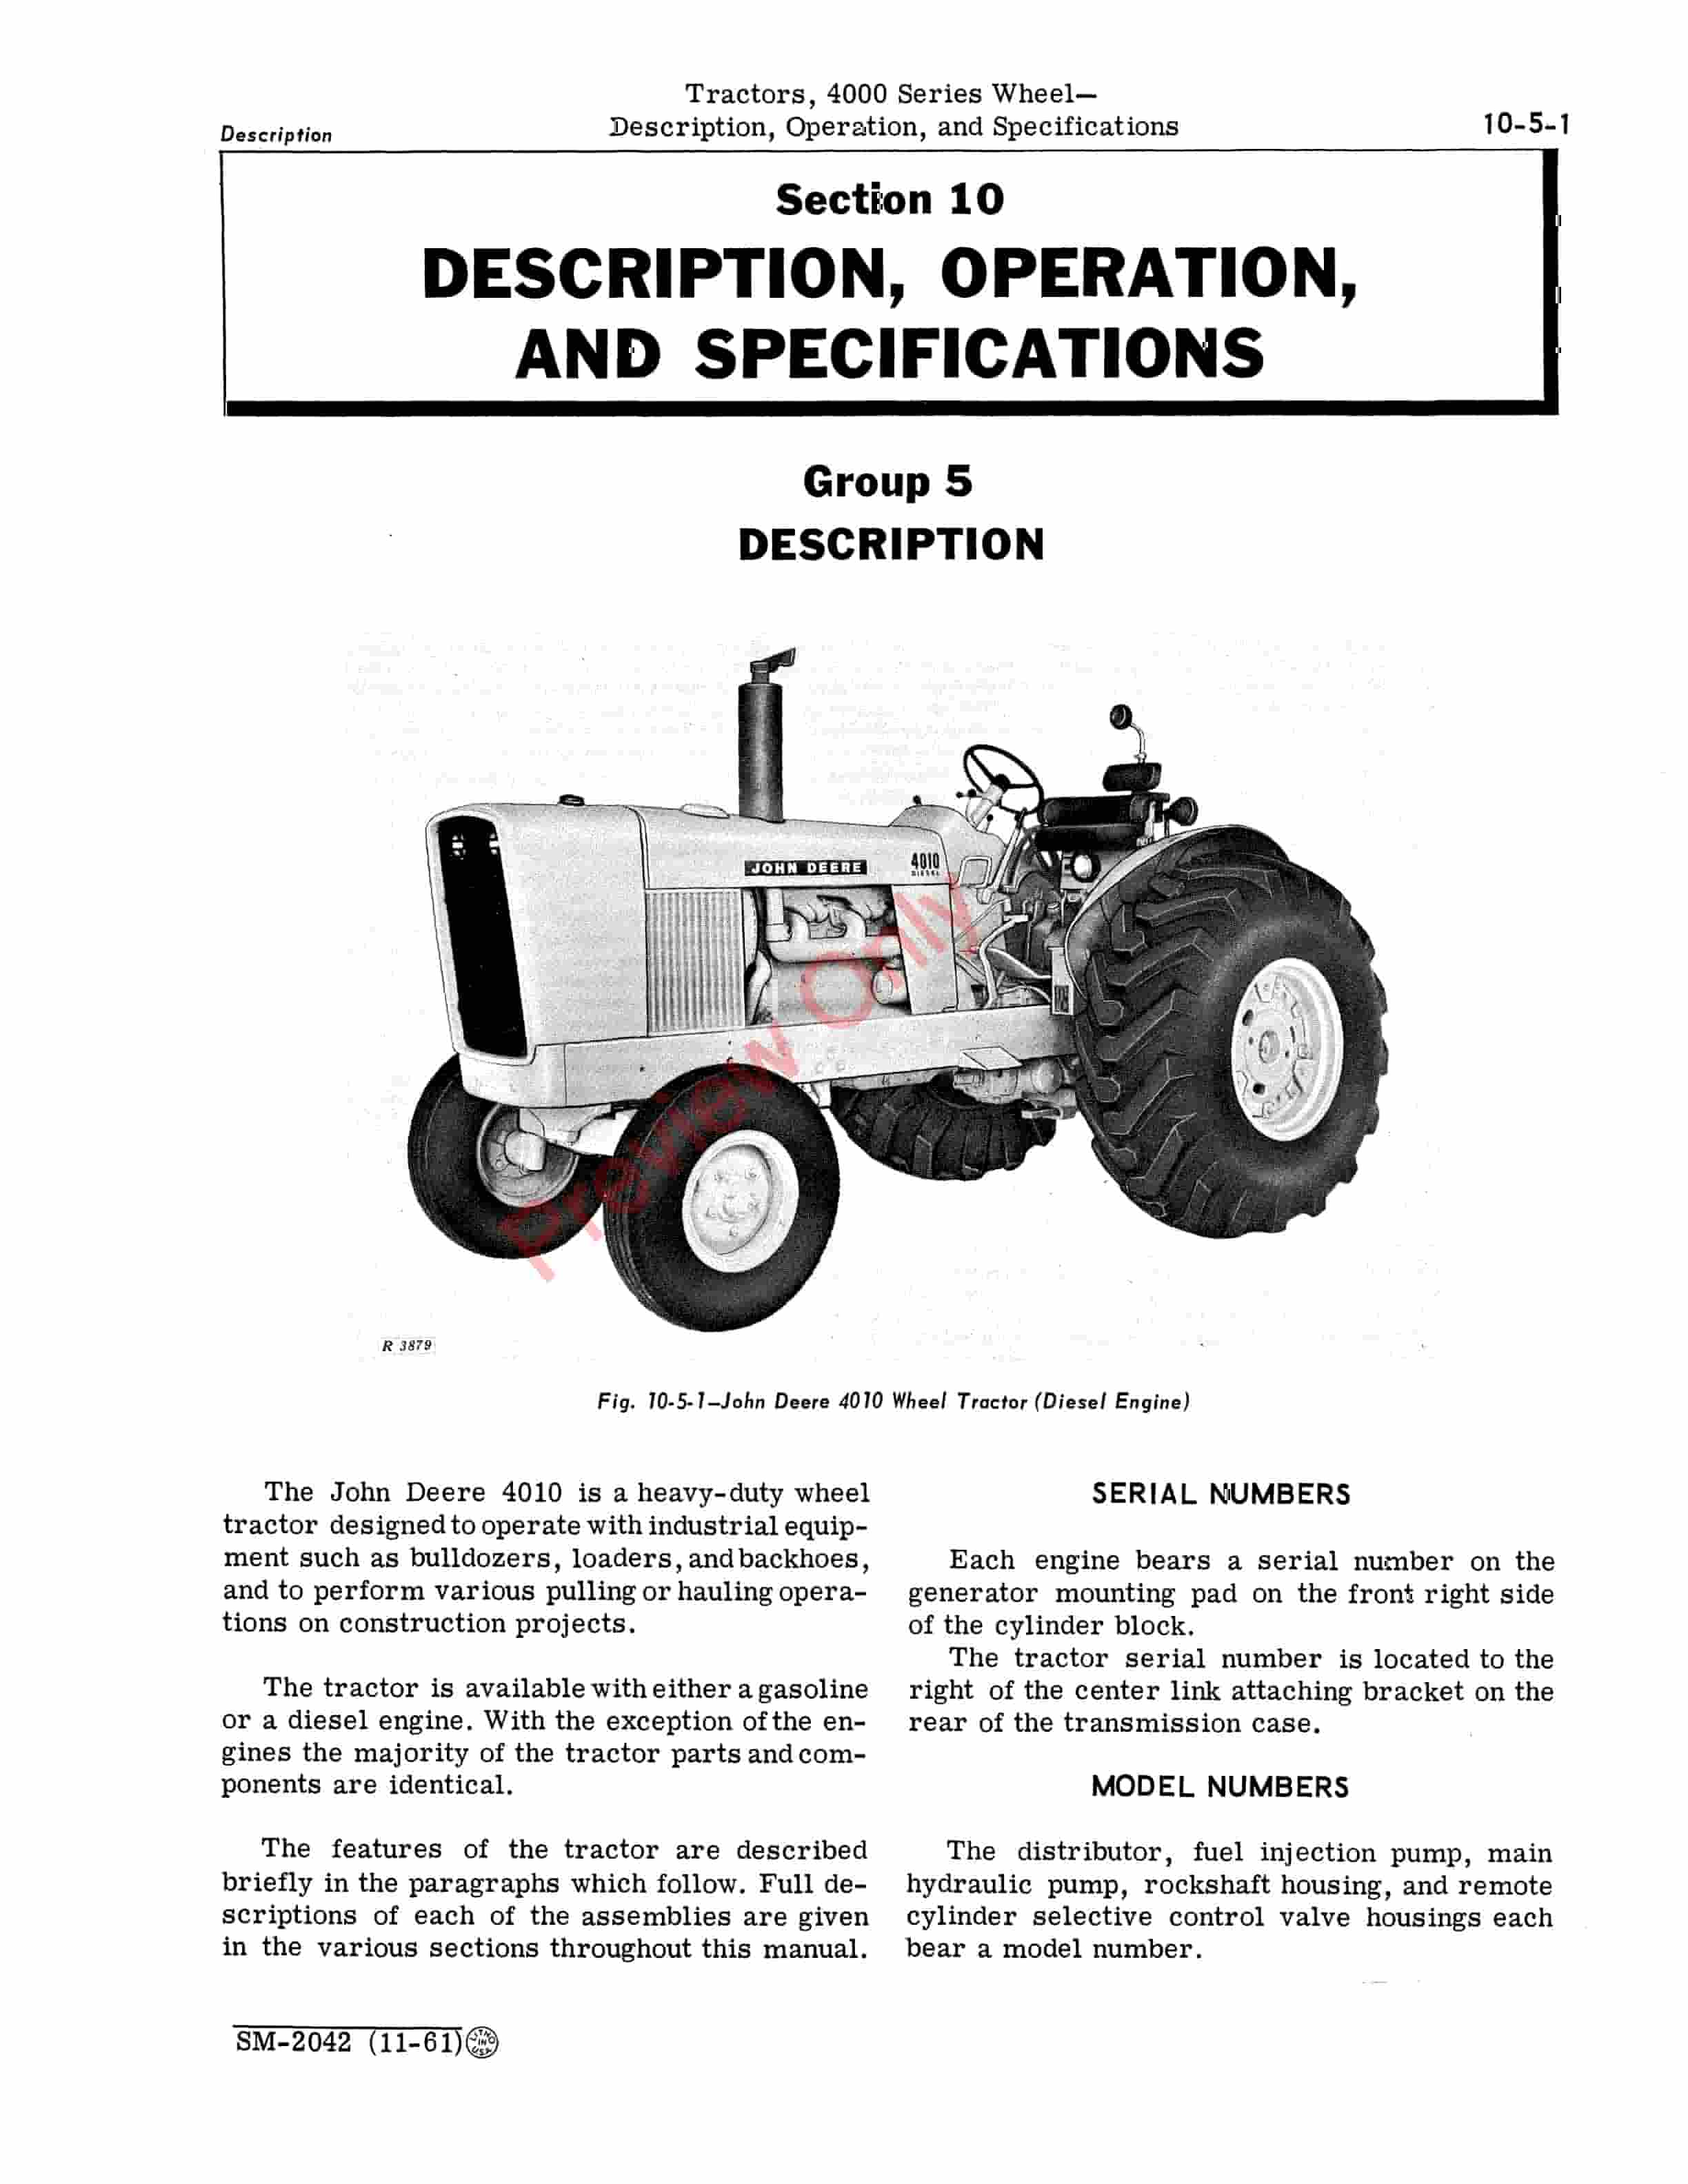 John Deere 4000 Series Wheel Tractors Service Manual SM2042 01NOV61 5